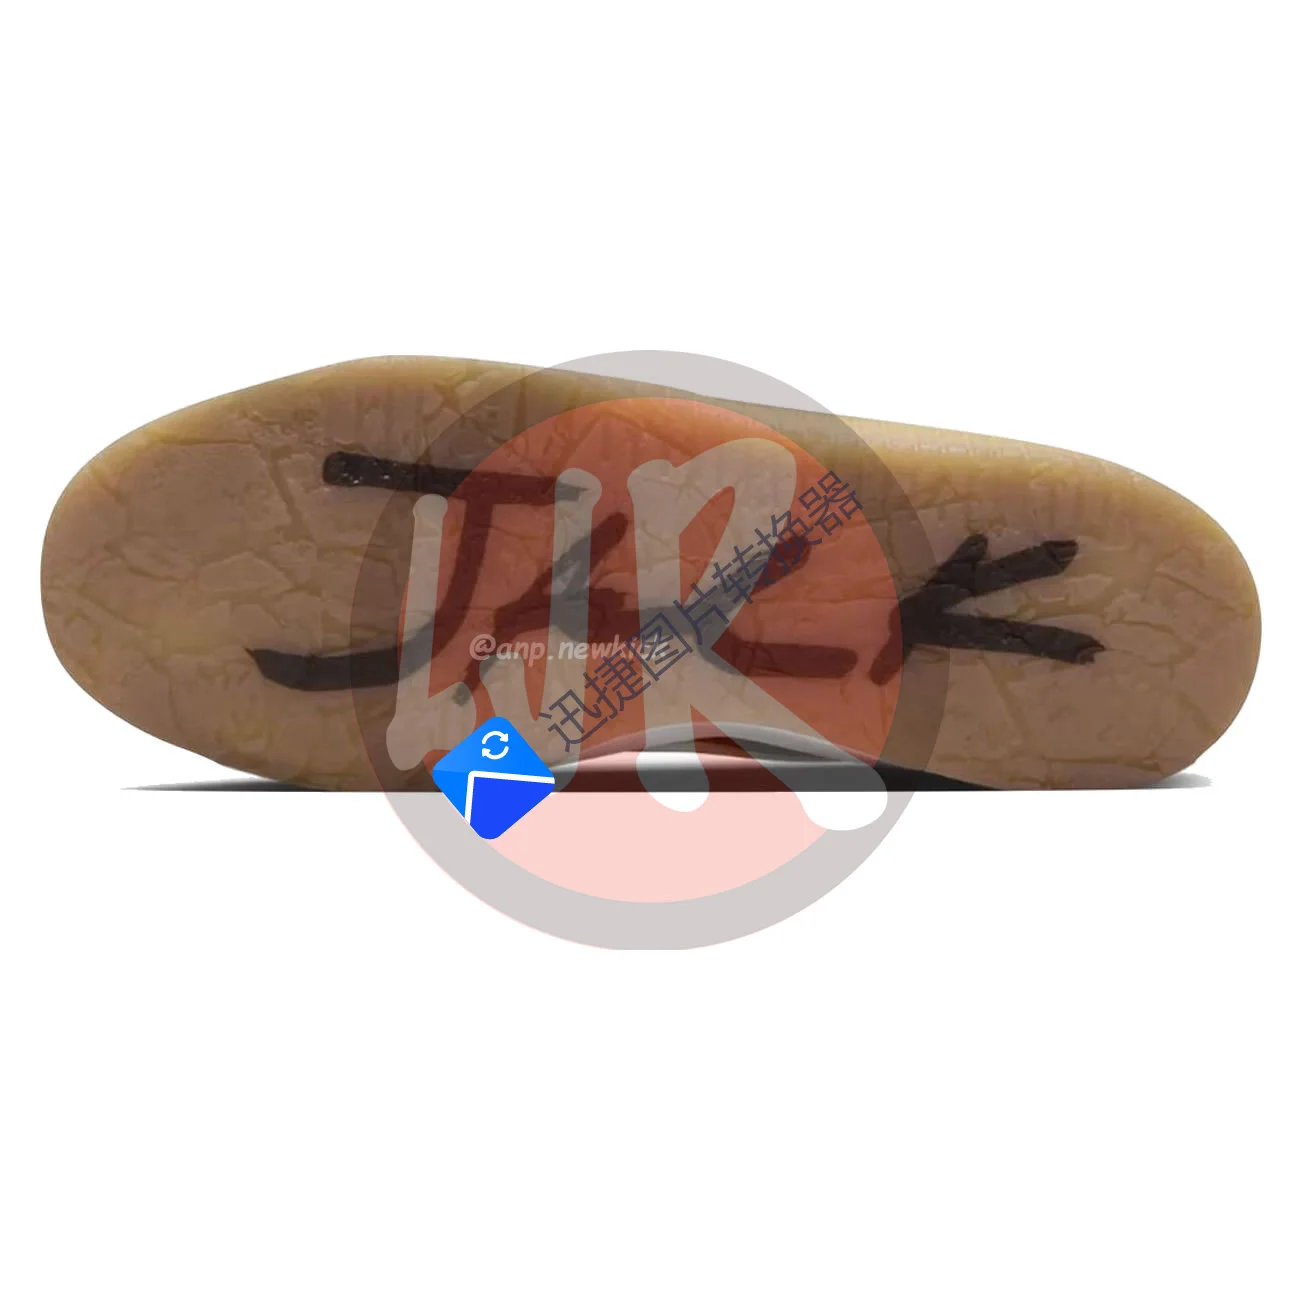 Travis Scott X Jordan Cut The Check Trainer Release Date Ljr Sneakers (19) - bc-ljr.net